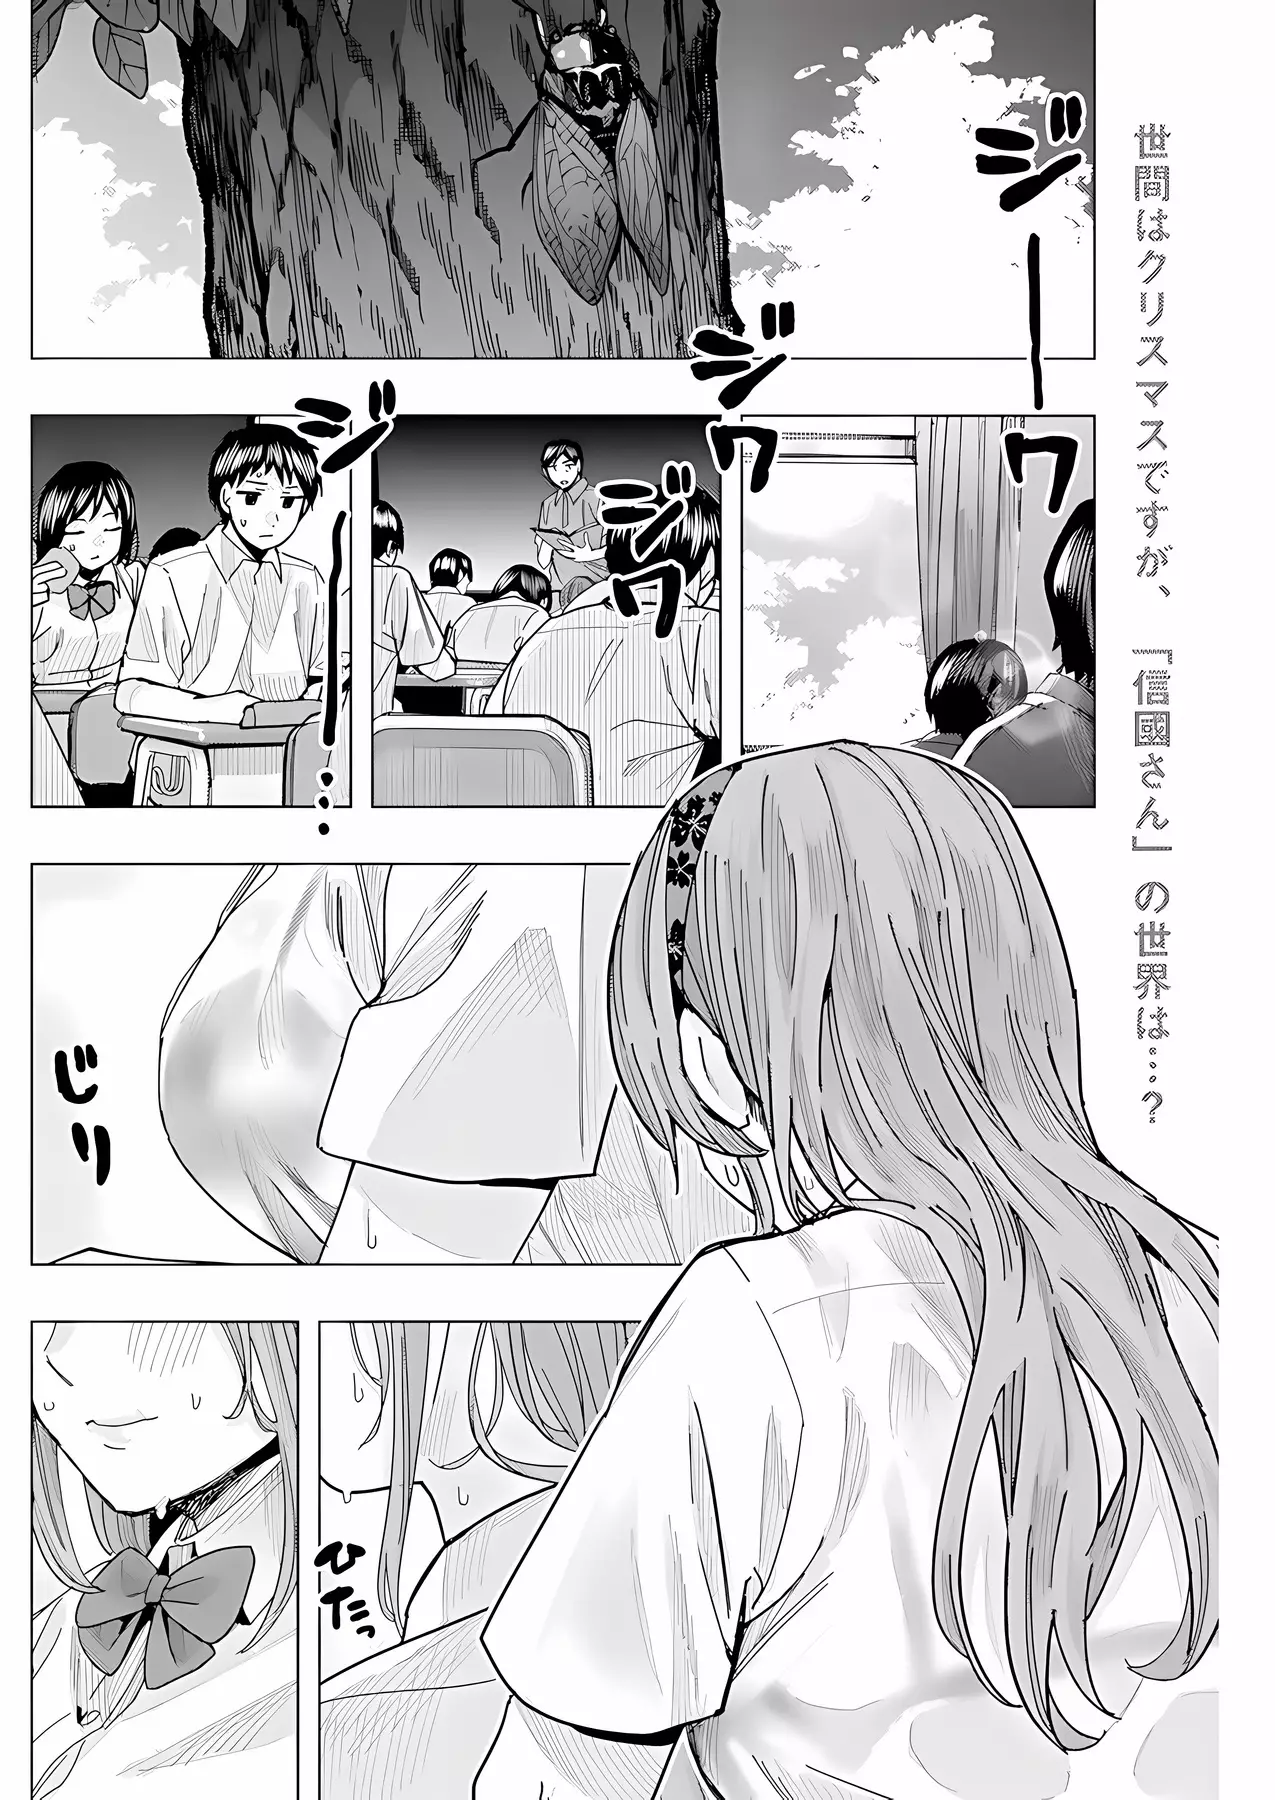 "nobukuni-San" Does She Like Me? - 26 page 3-515eac28